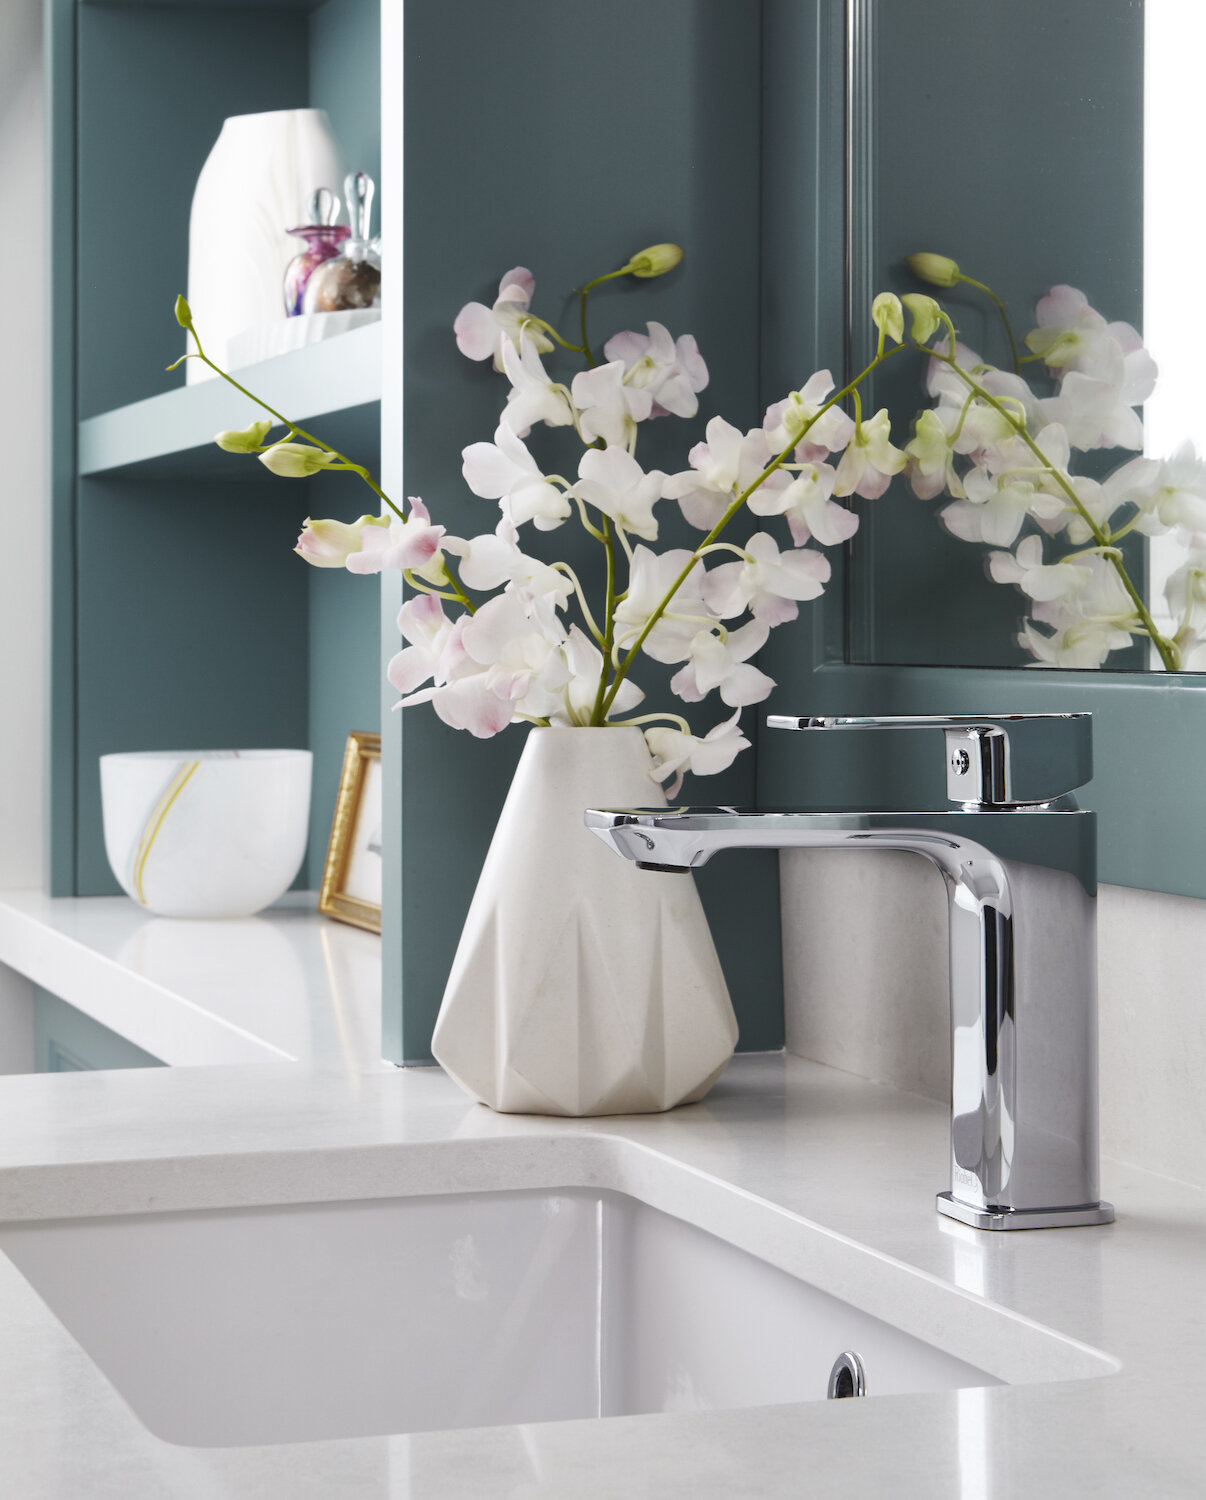 chrome-faucet-detail-orchid-white-vase-bathroom-cori-halpern-interiors-almond copy.jpg